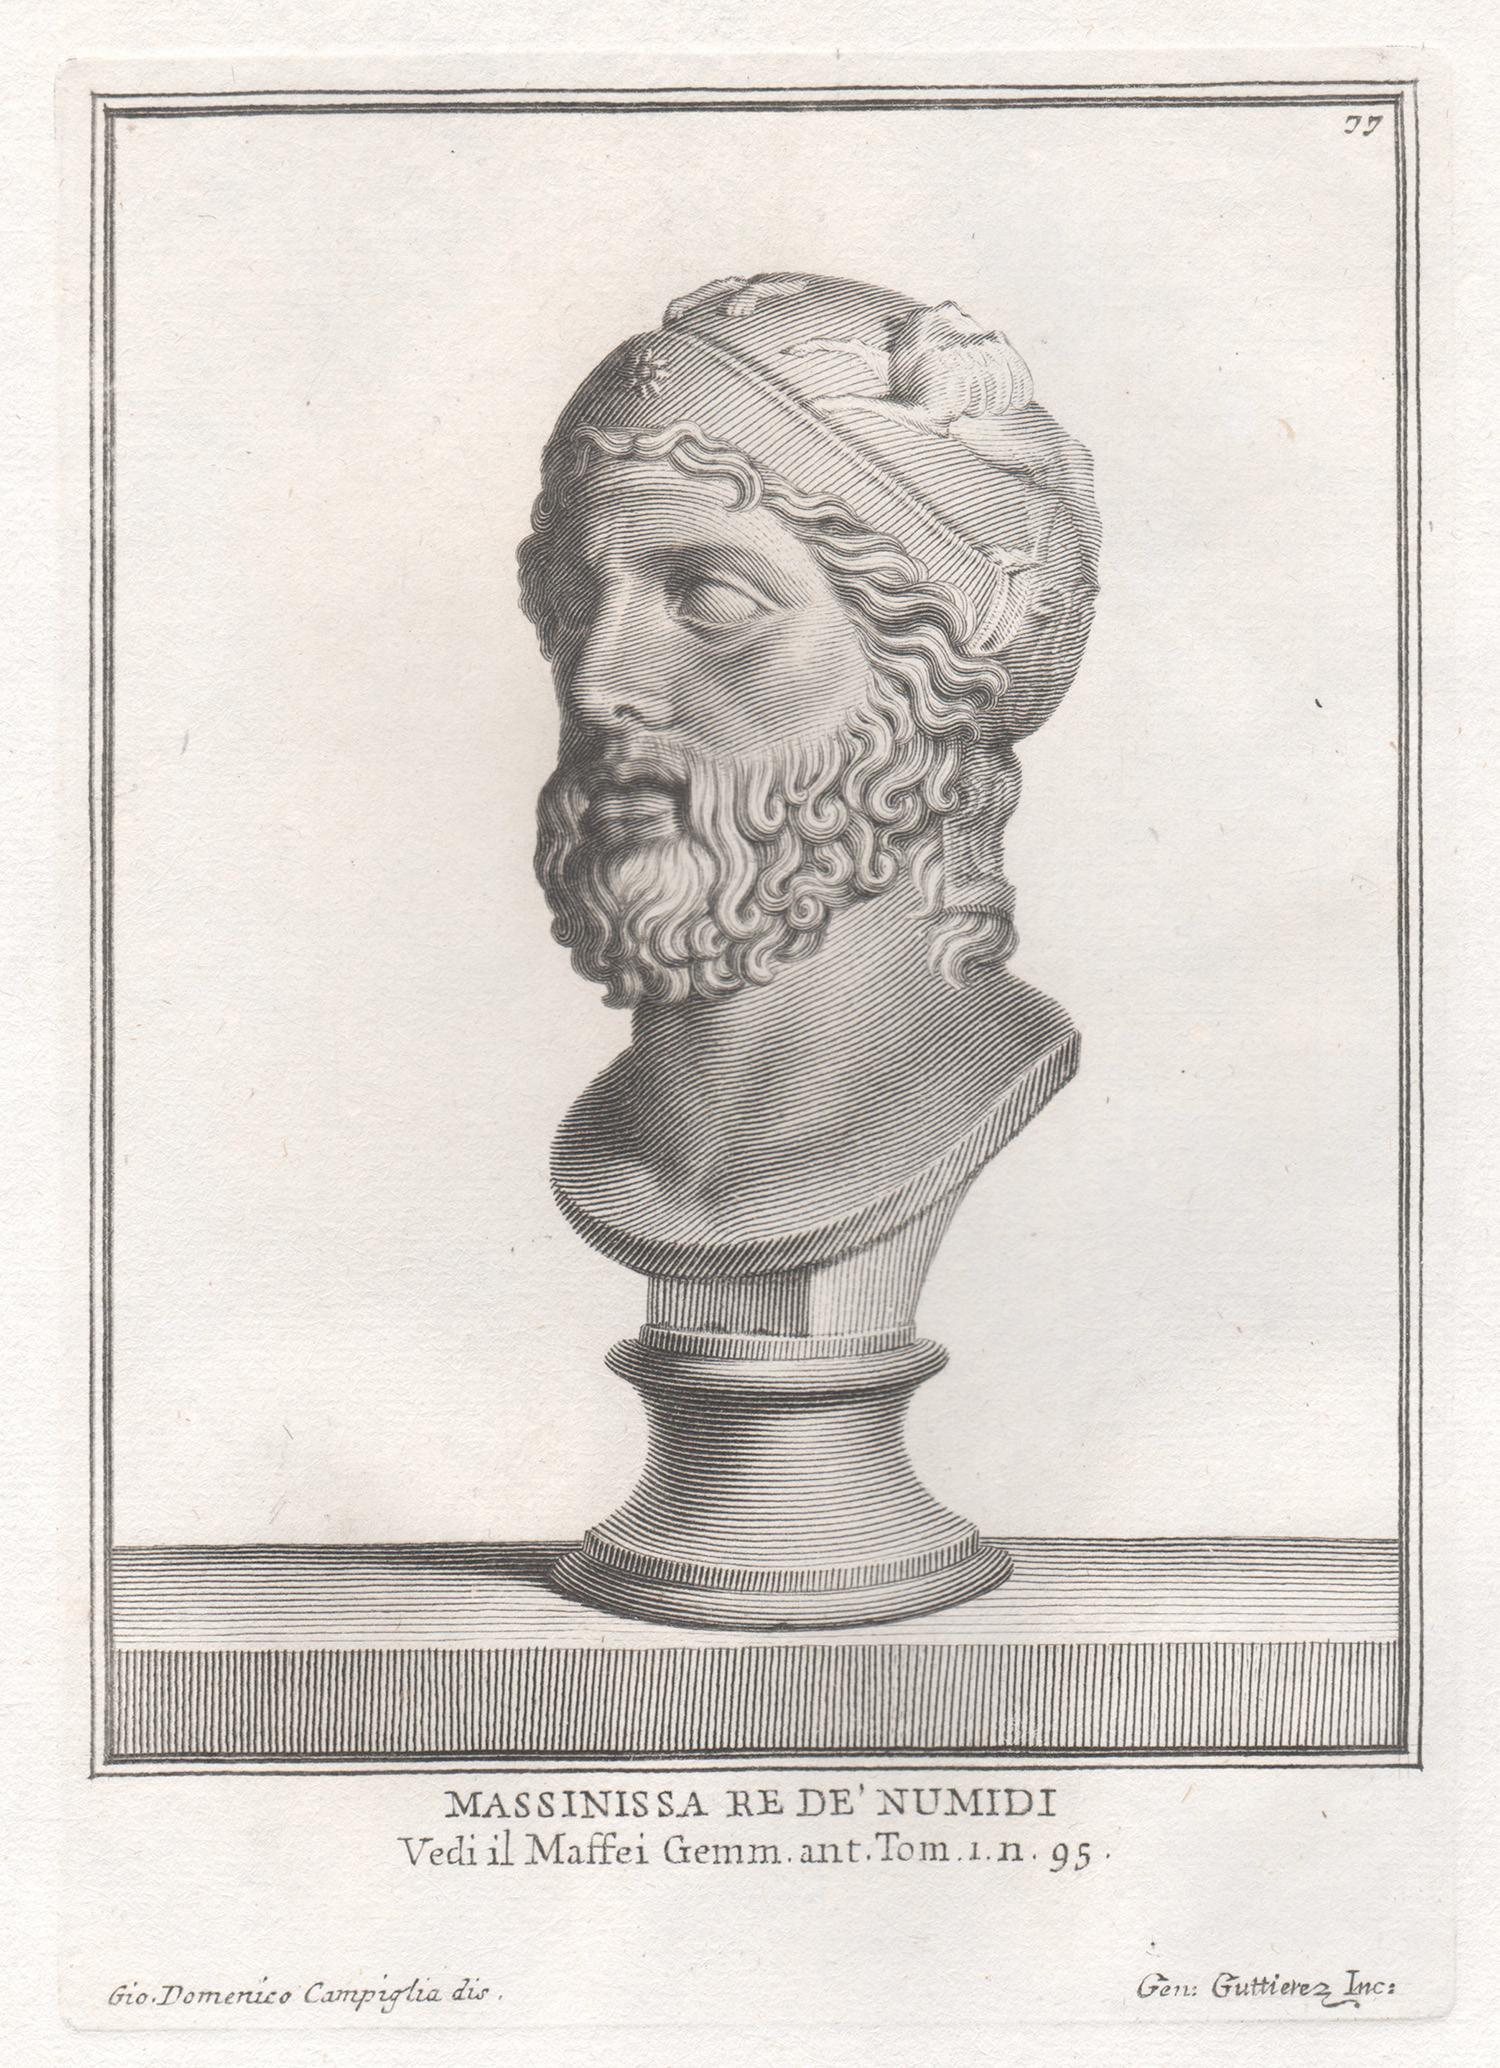 Giovanni Domenico Campiglia Figurative Print – Masinissa, König von Nubia, 18. Grand Tour Klassischer antiker Kupferstichdruck